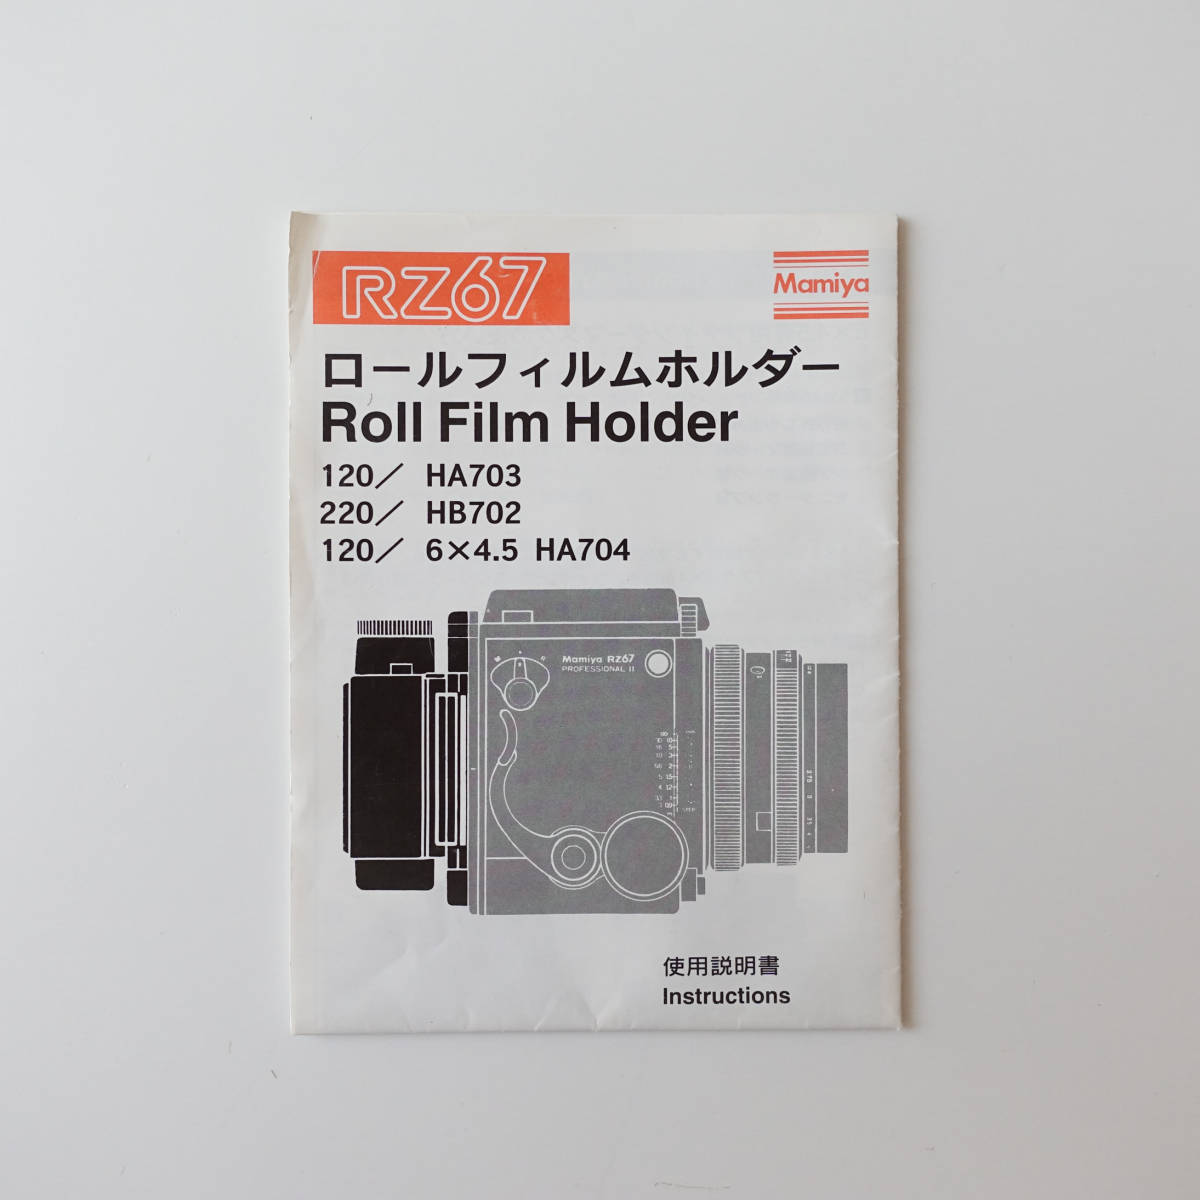 Mamiya Mamiya RZ67 roll film holder Roll Film Holder use instructions + written guarantee / 120 HA703 / 220 HB702 / English Japanese city . woven .